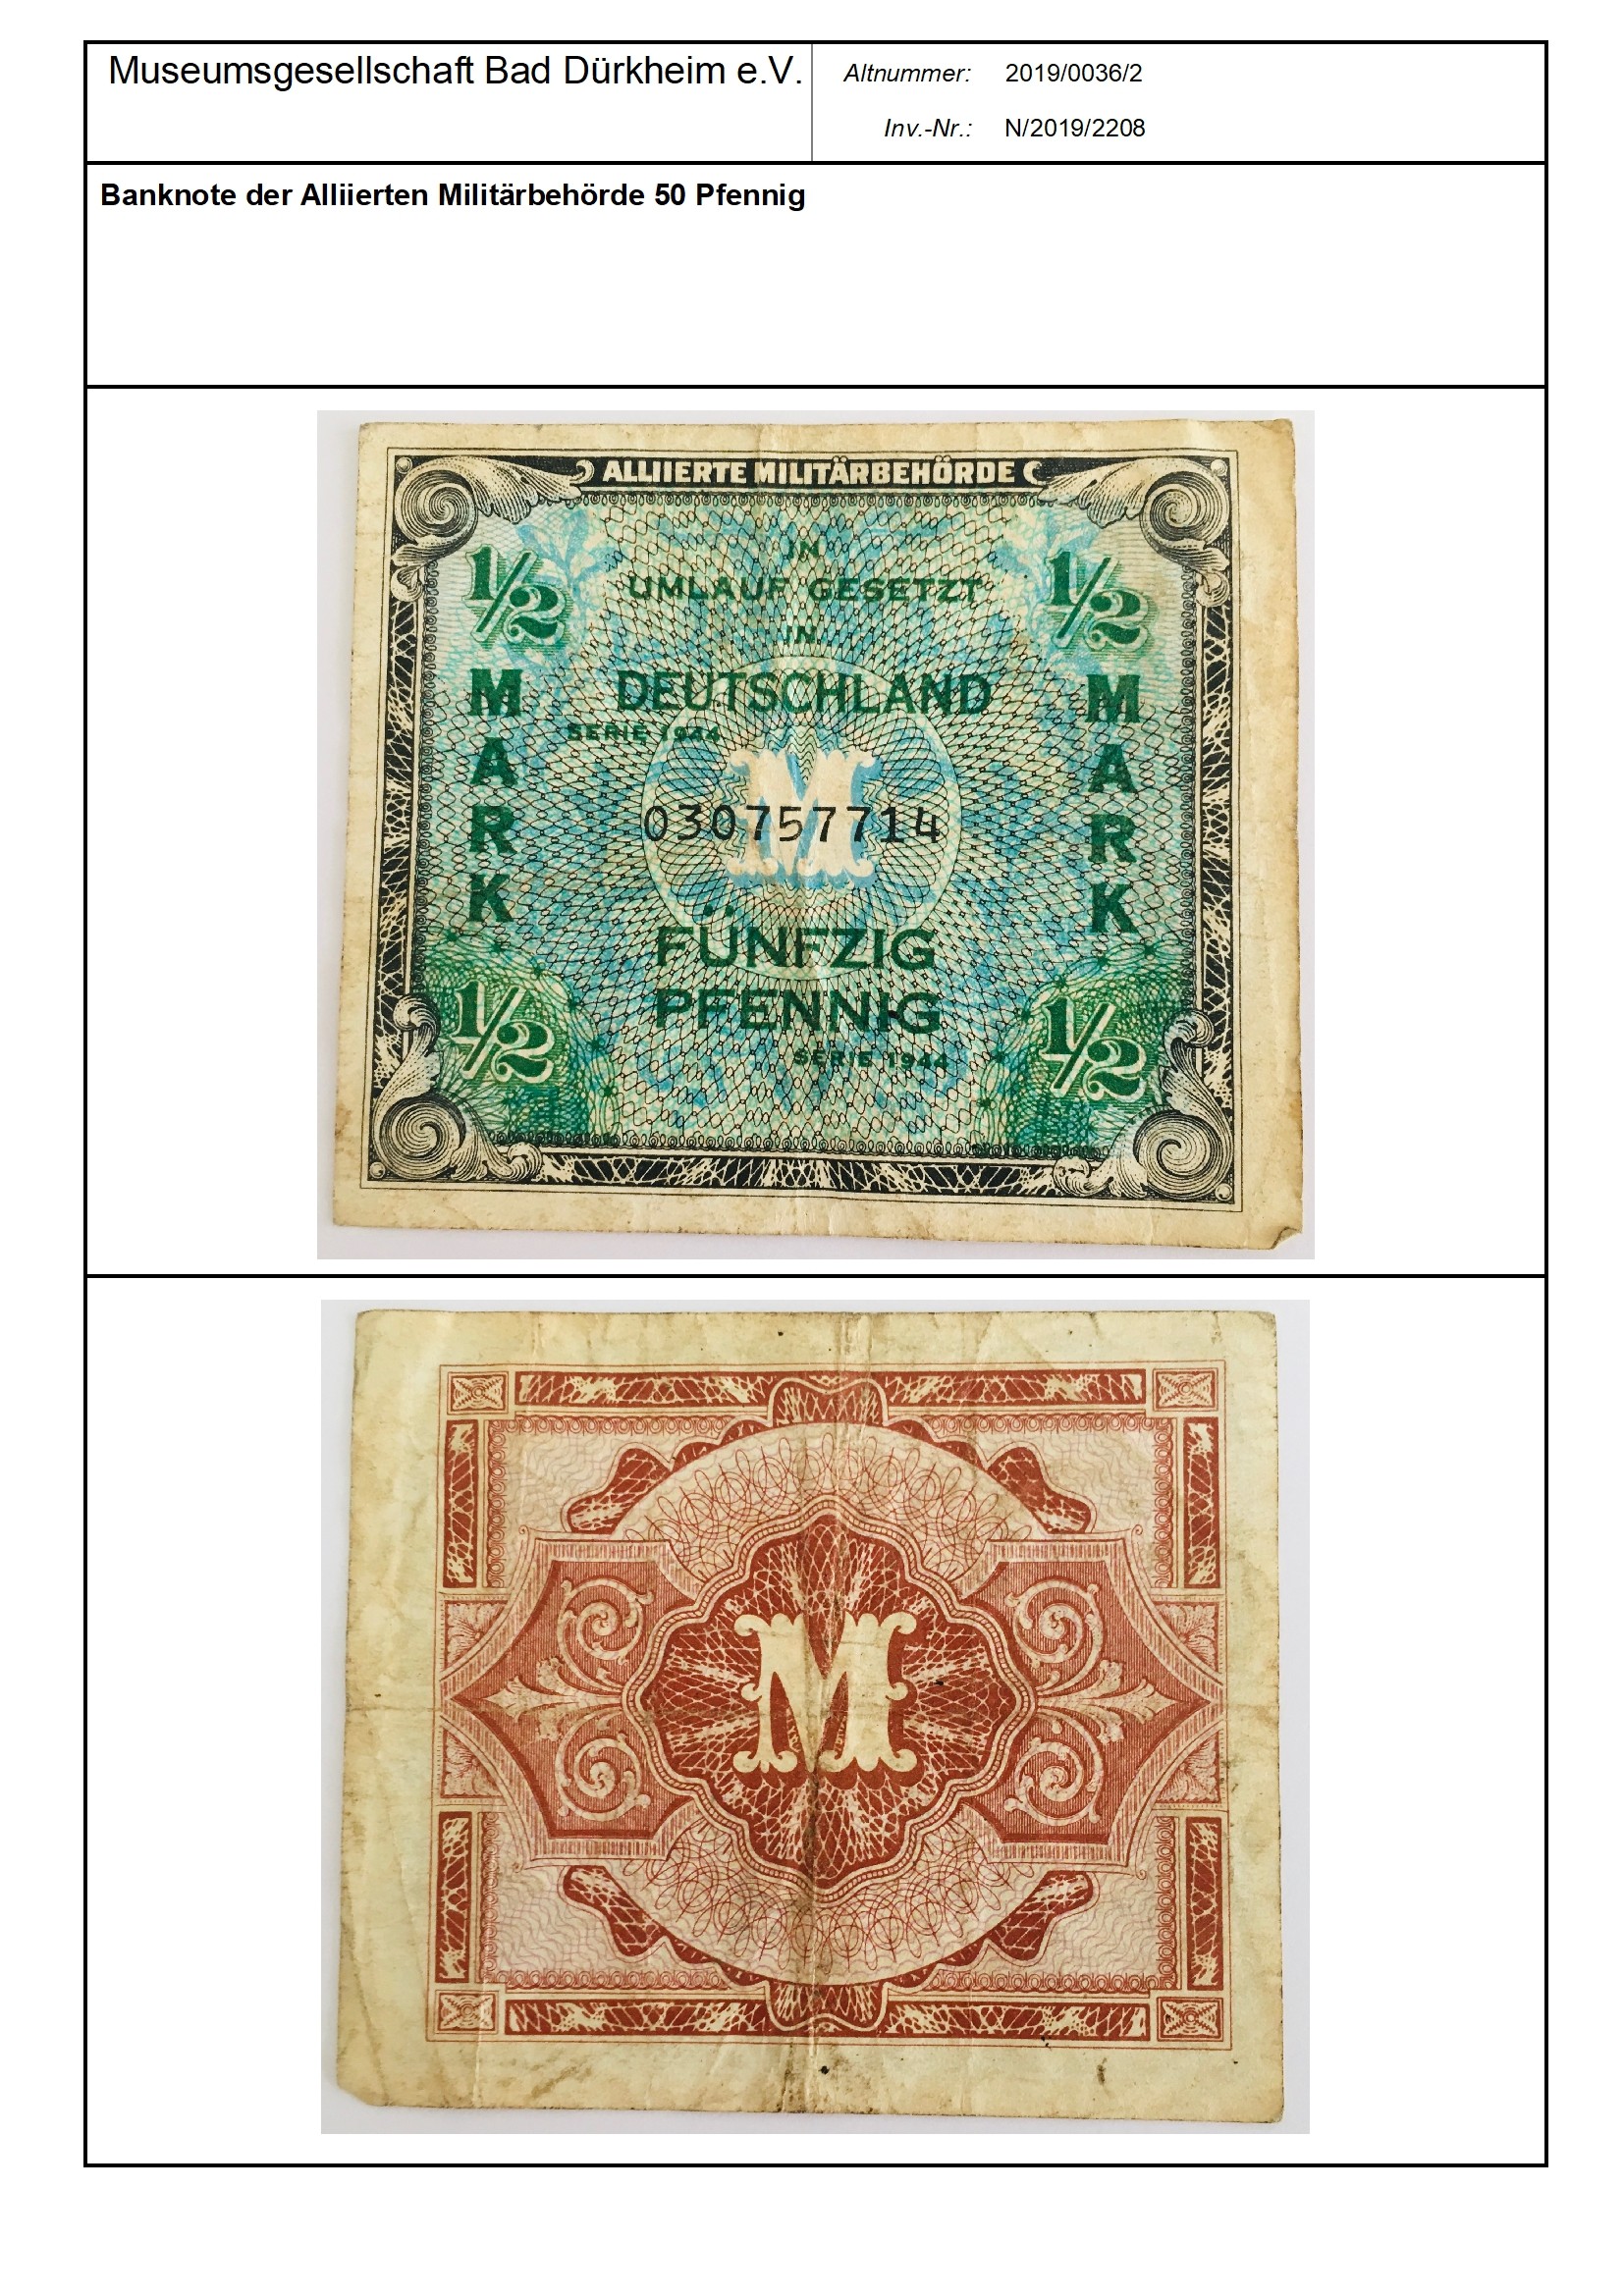 Banknote der Alliierten Militärbehörde 50 Pfennig
Serien-Nummer: 030757714 (Museumsgesellschaft Bad Dürkheim e.V. CC BY-NC-SA)